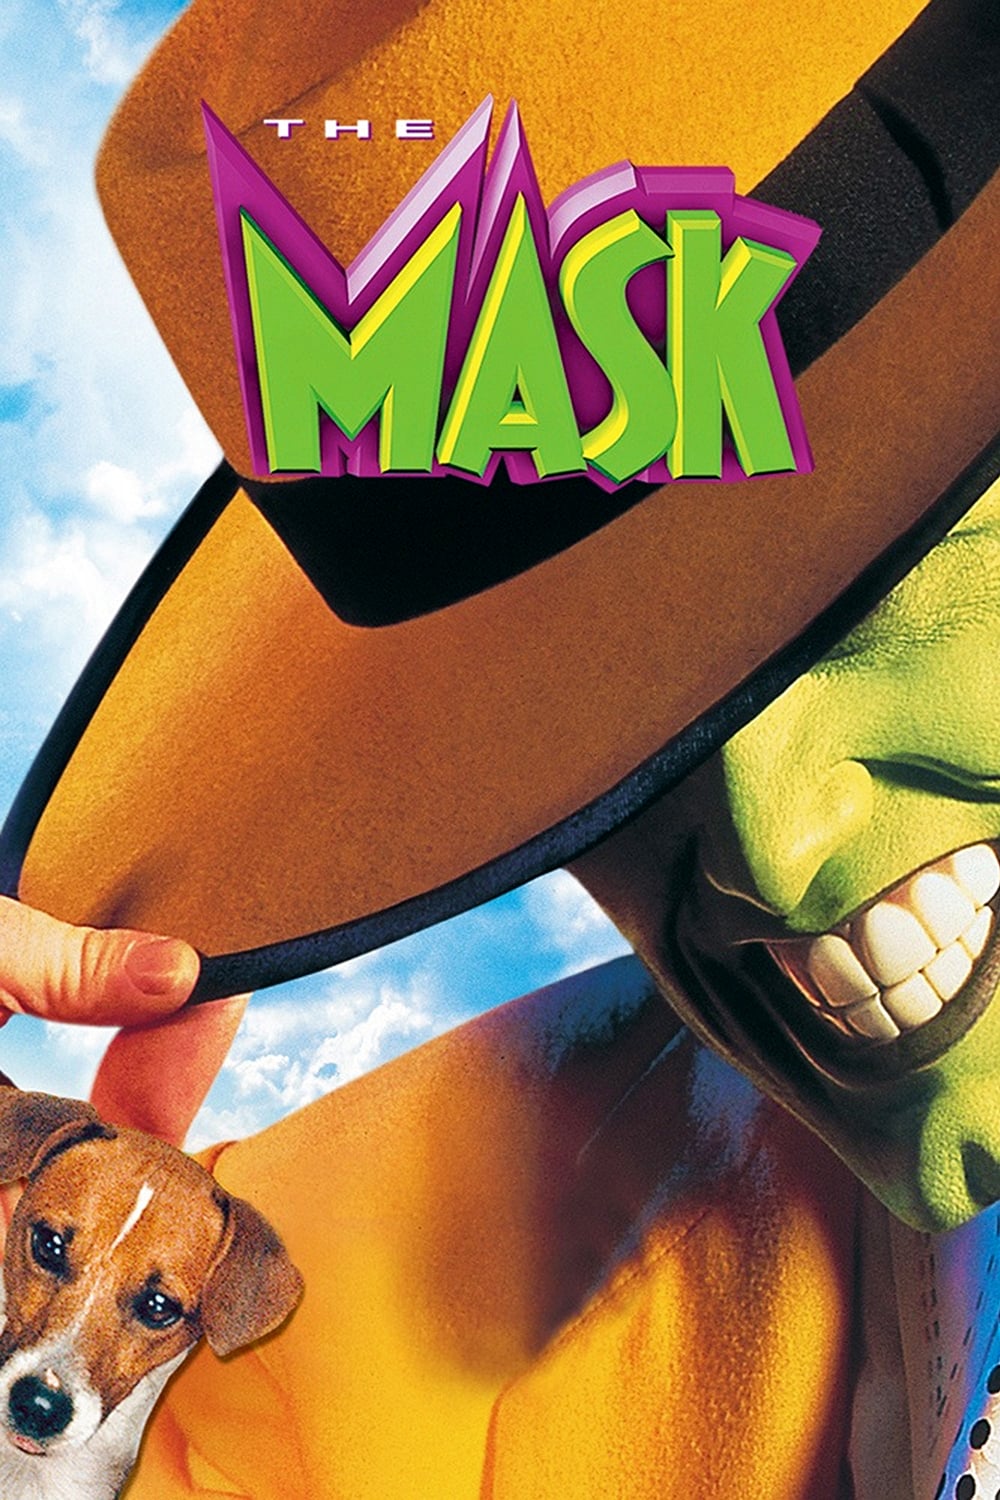 Affiche du film "The Mask"